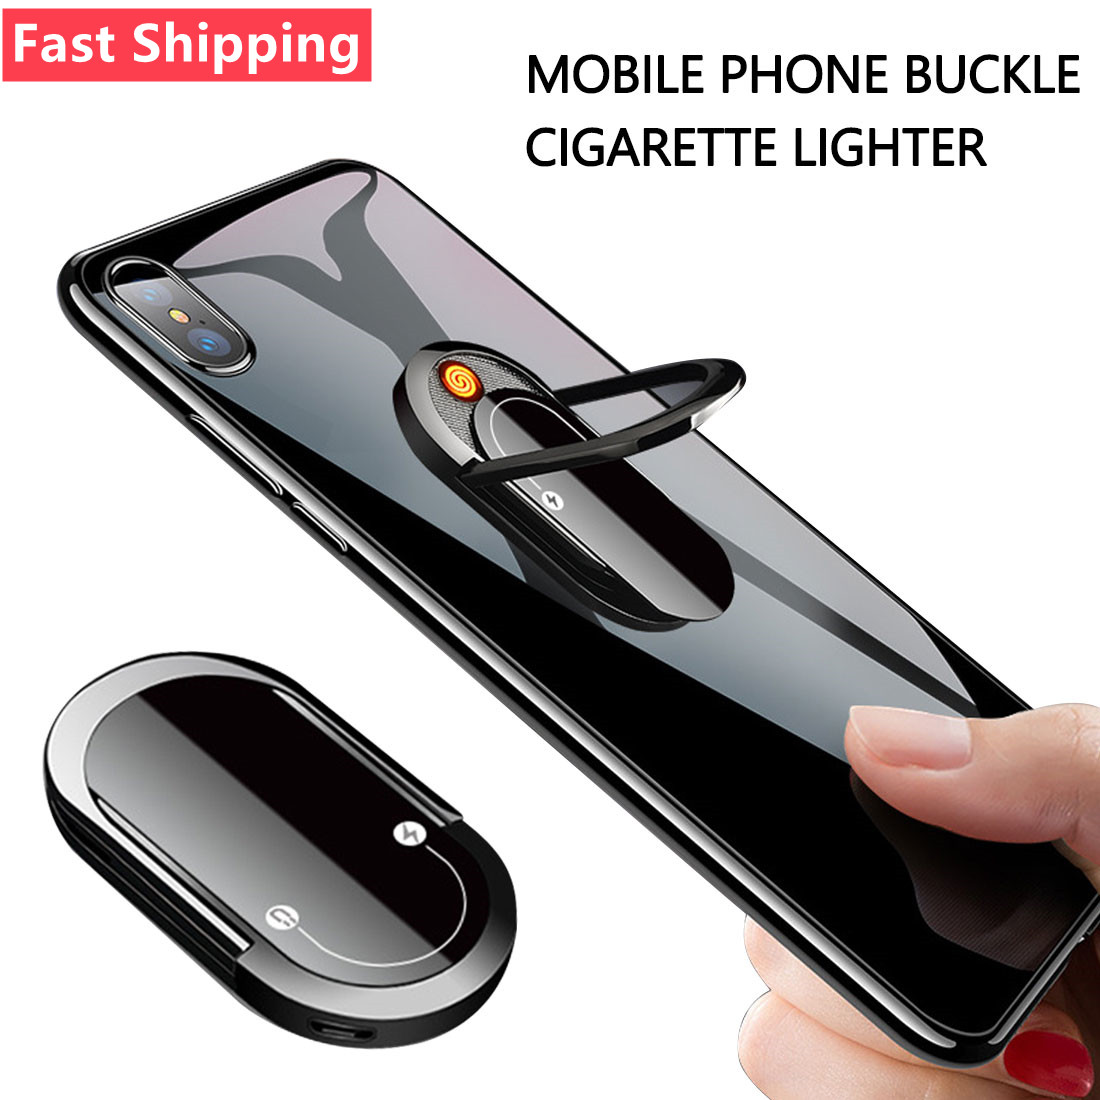 Creative USB Cigarette Lighter Can Do Mobile Phone Bracket